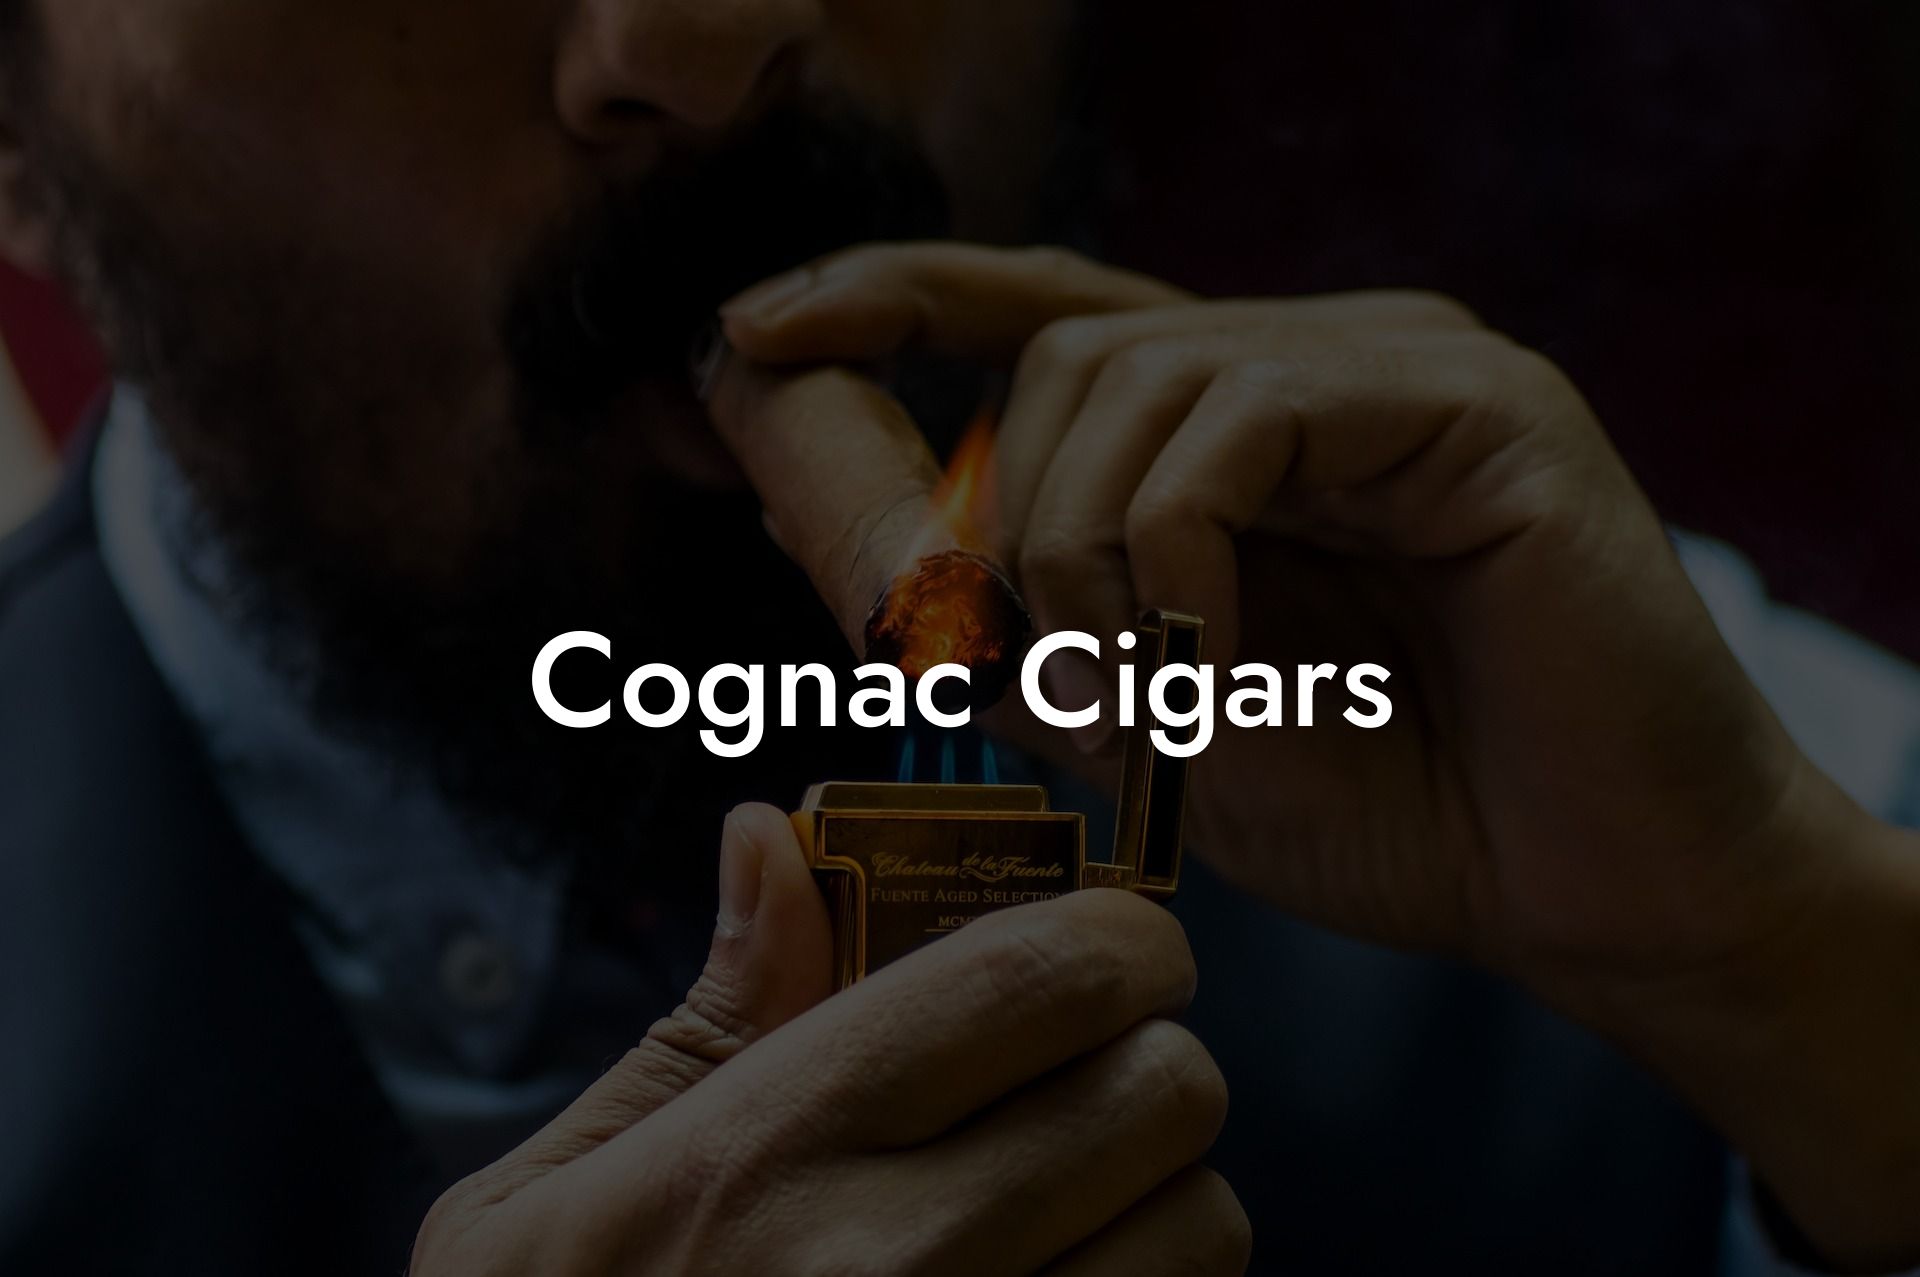 Cognac Cigars